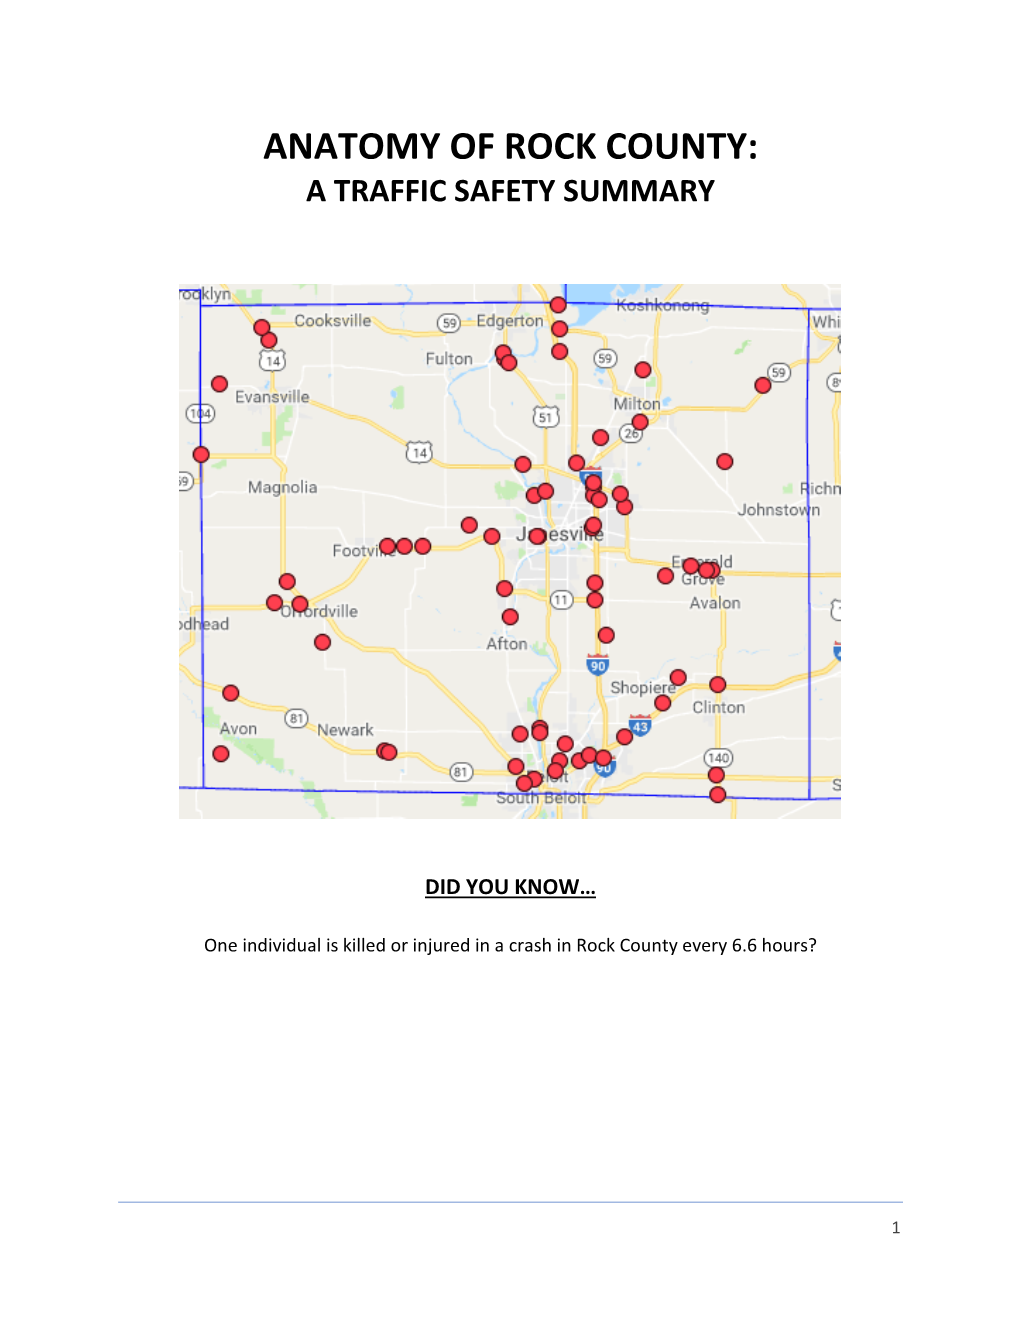 Anatomy of Rock County: a Traffic Safety Summary